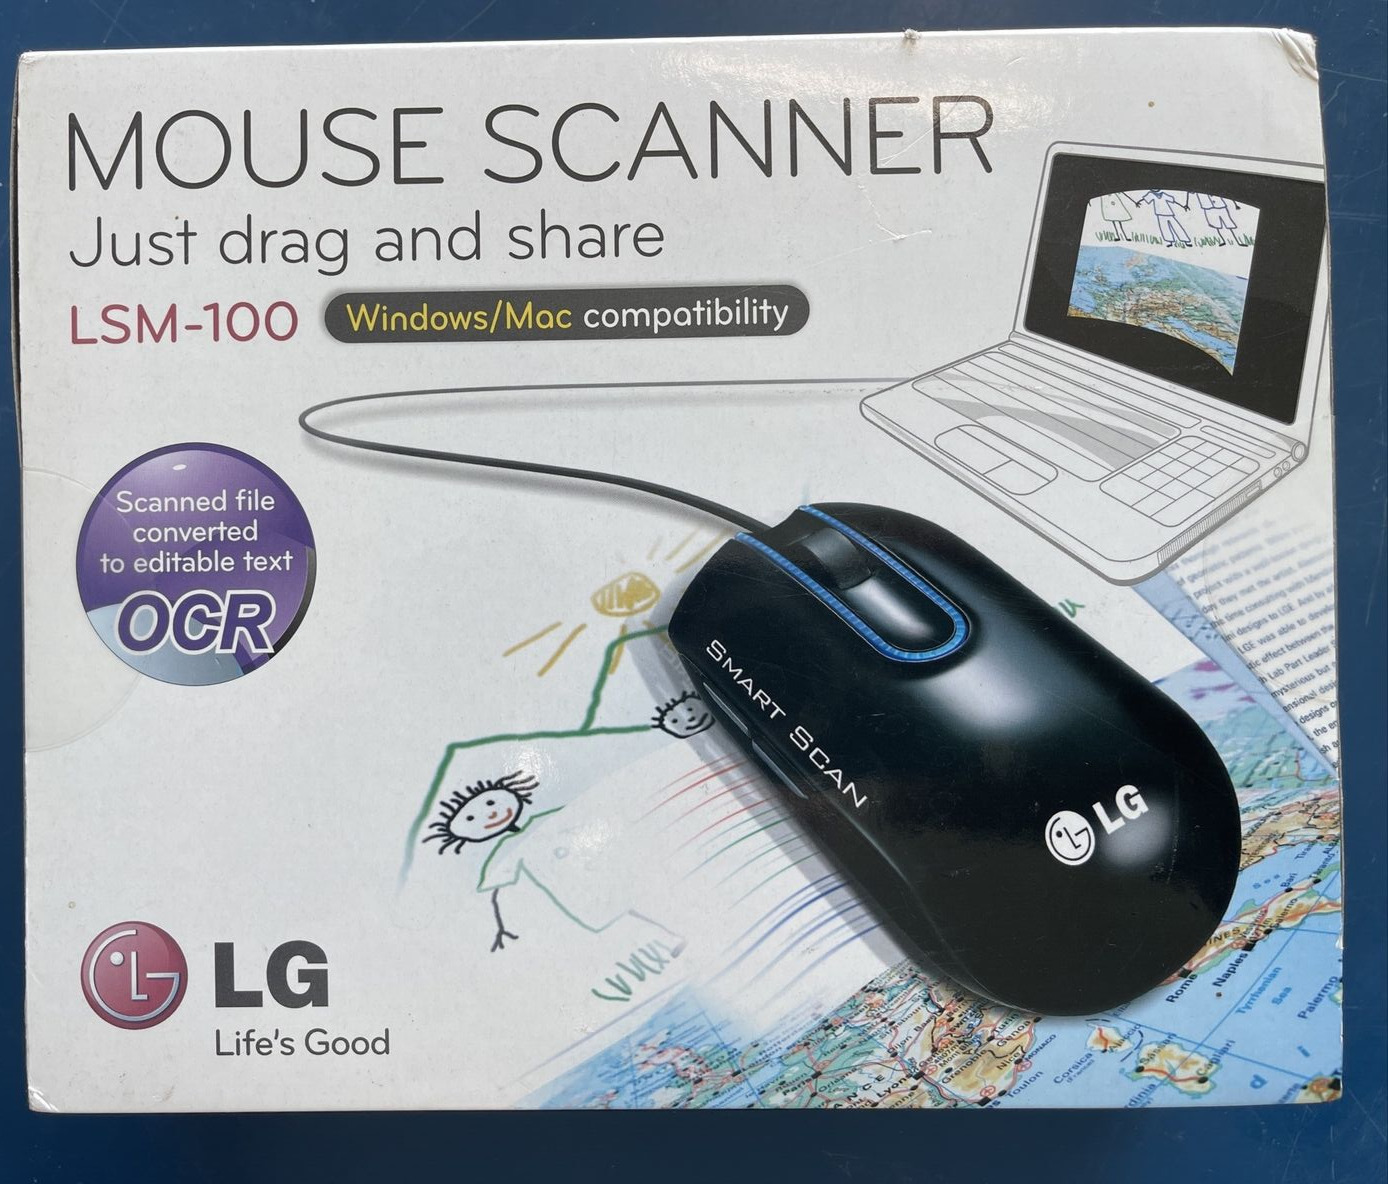 LSM-100 Mouse Scanner LG Smart Scan New Unopened Windows PC Mac Compatible